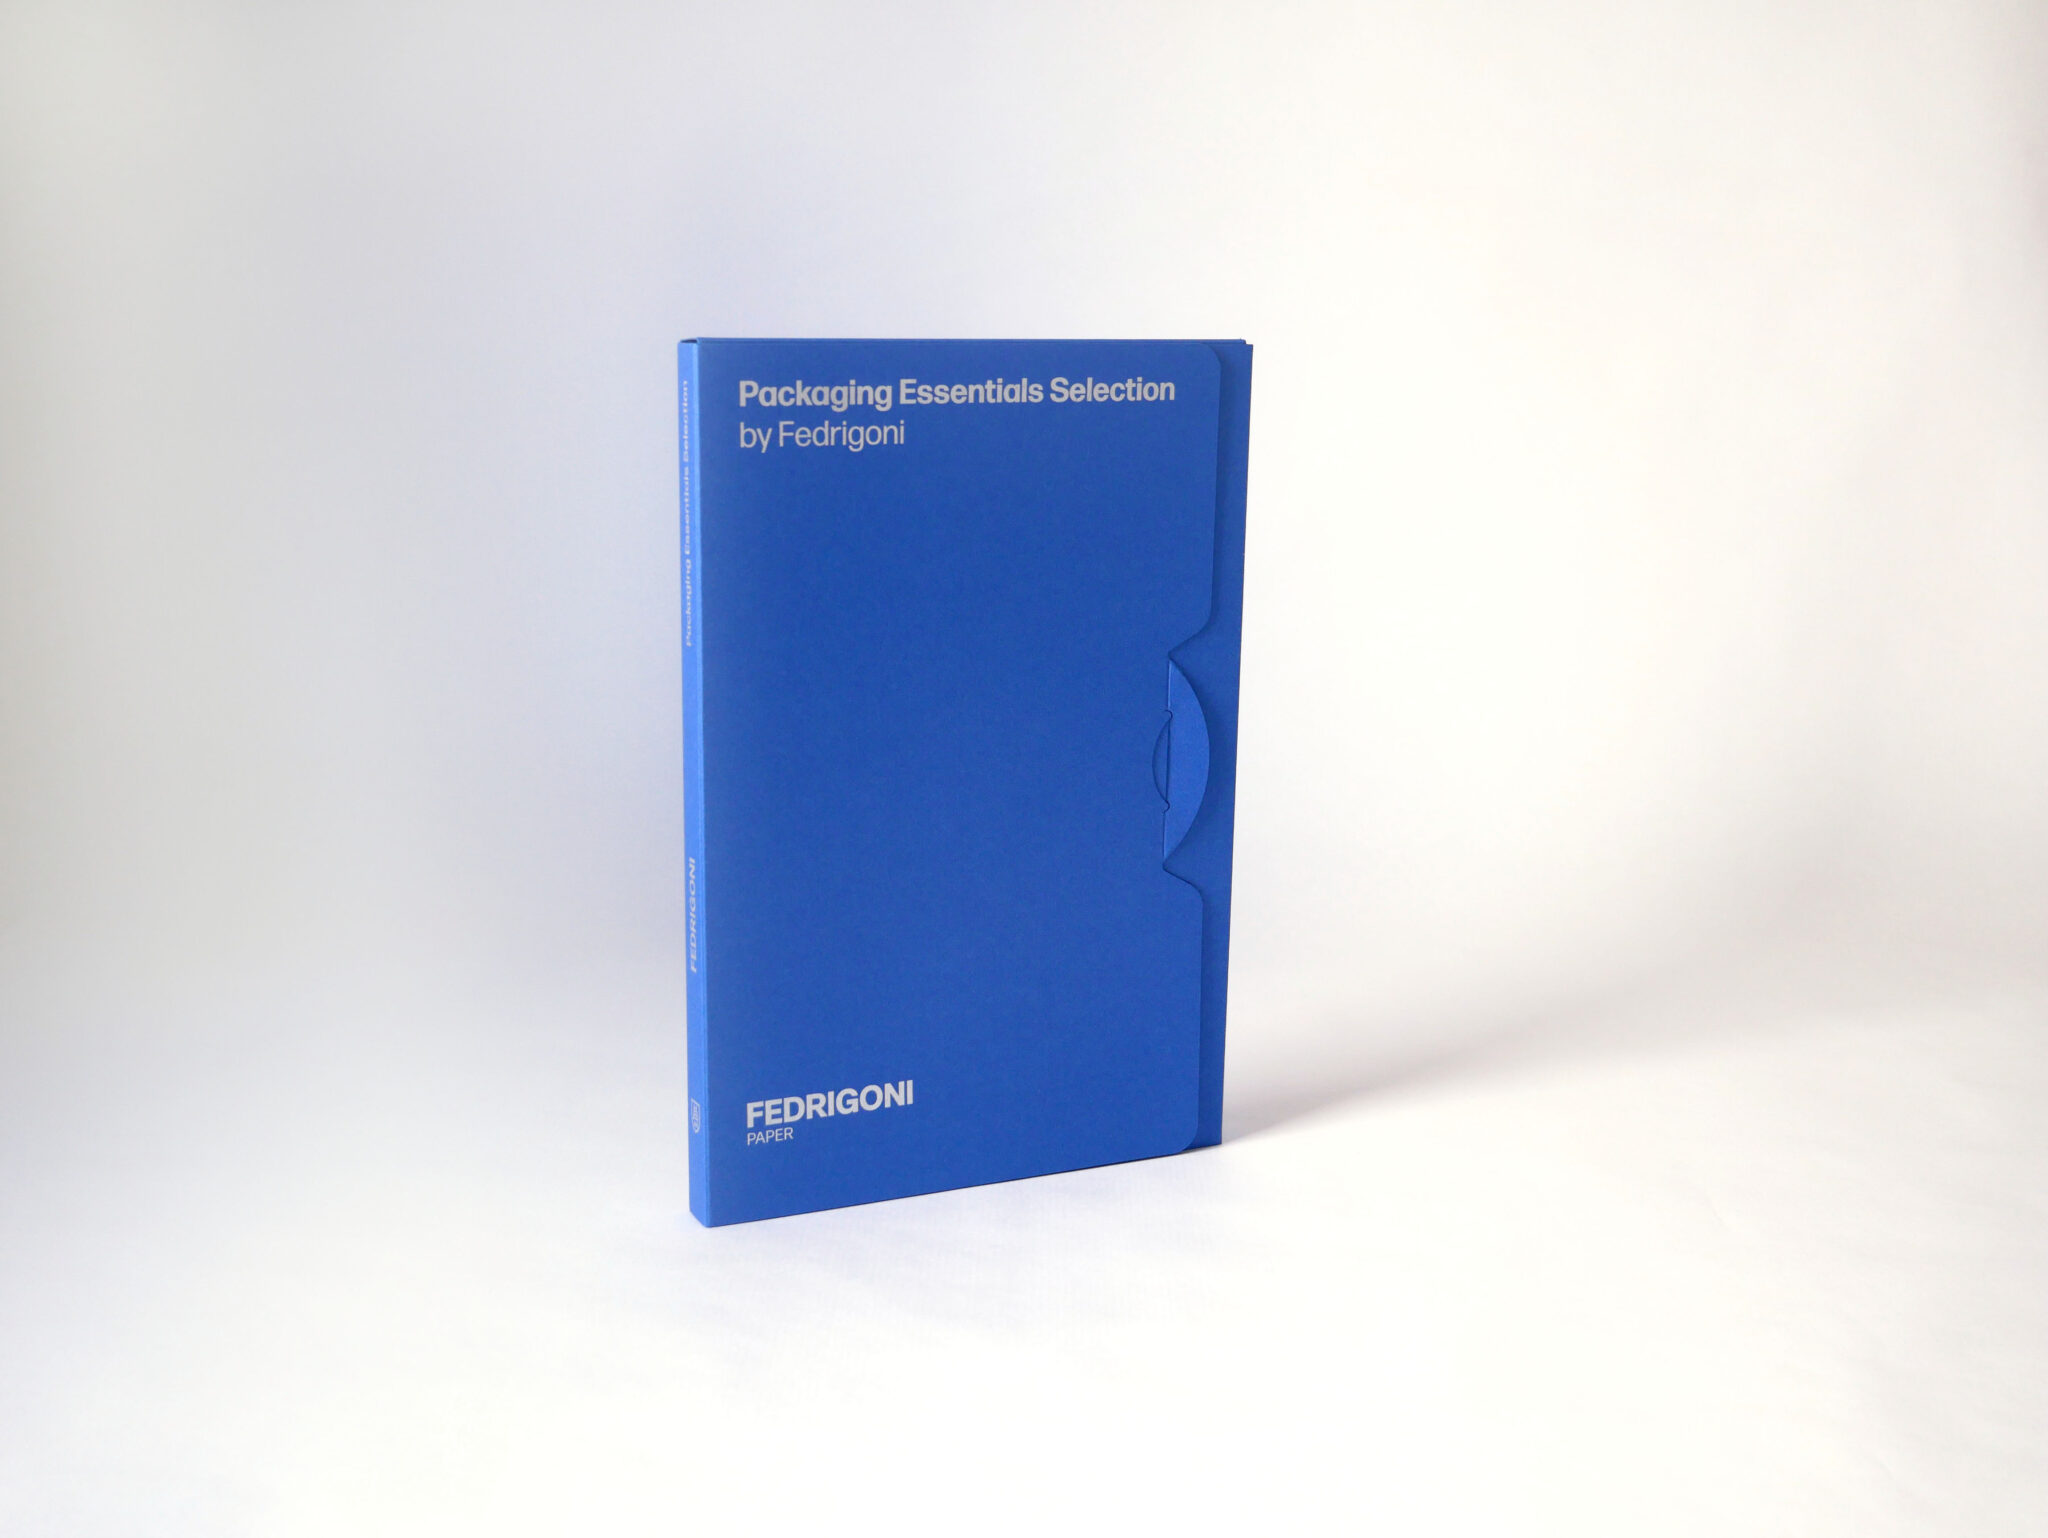 Nuevo catálogo Packaging Essentials Selection by Fedrigoni